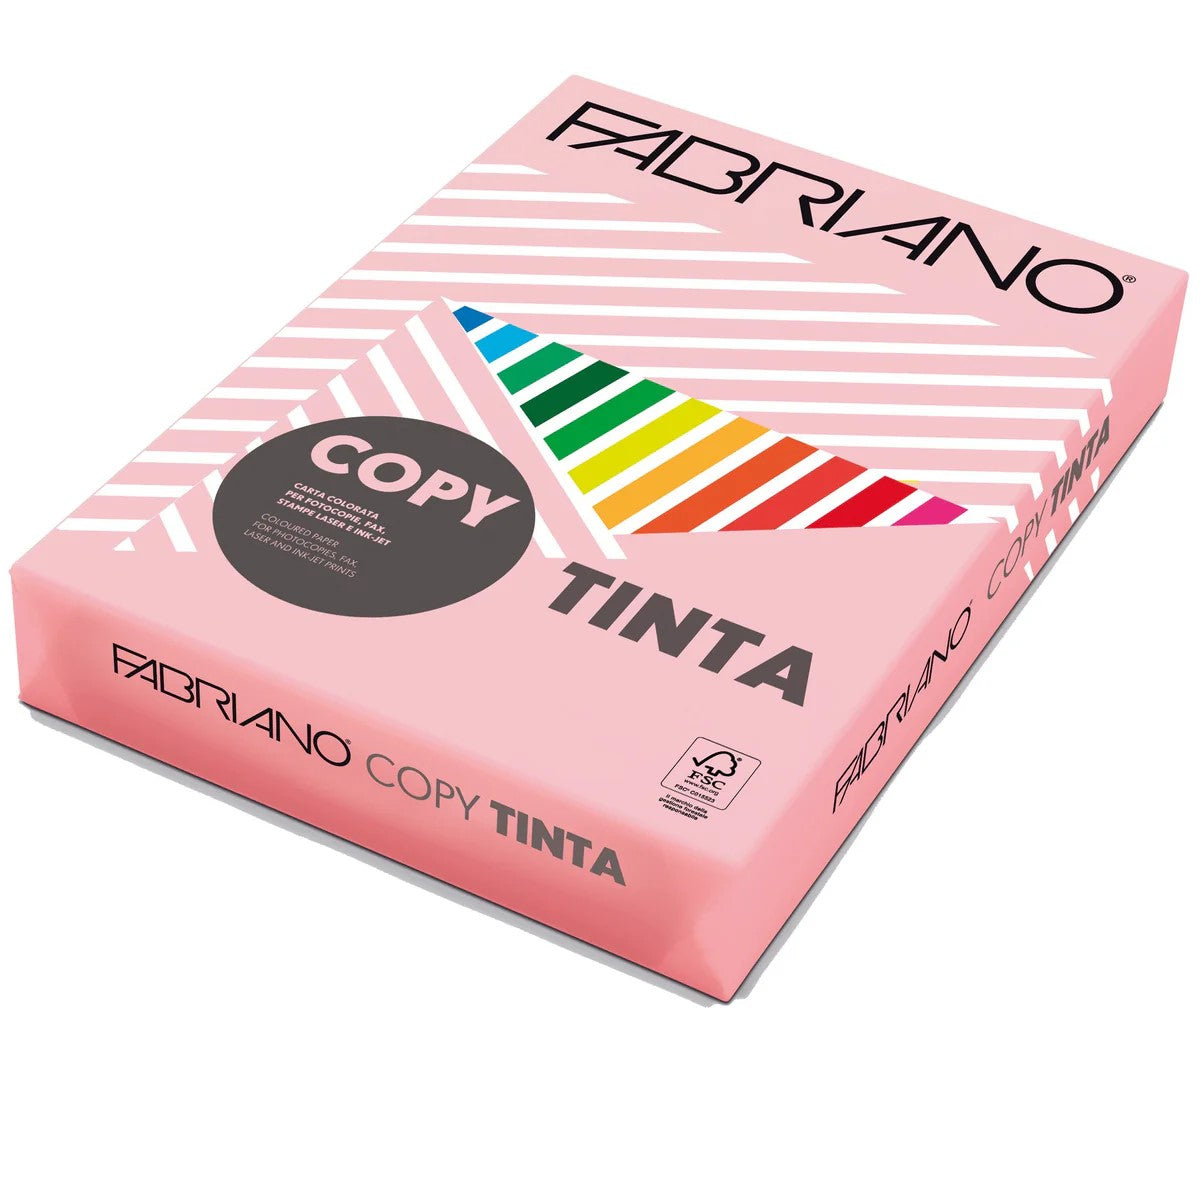 CF 5 Risme 500ff carta f.to A4 80gr.colore Rosa CopyTinta